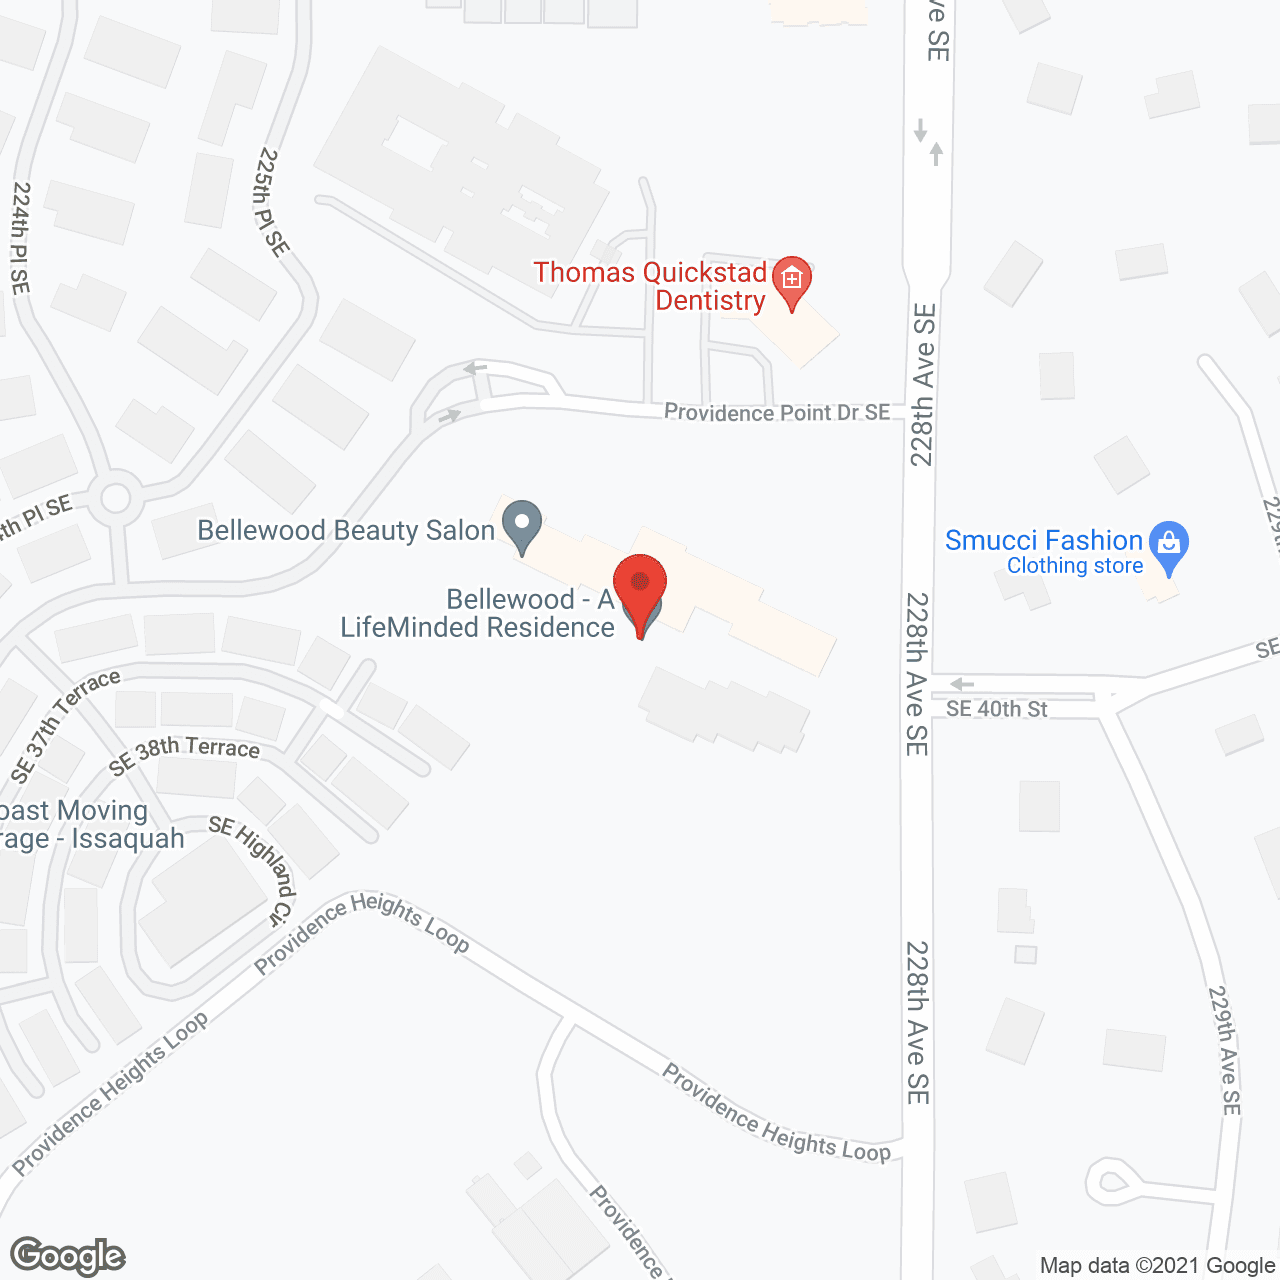 Bellewood in google map